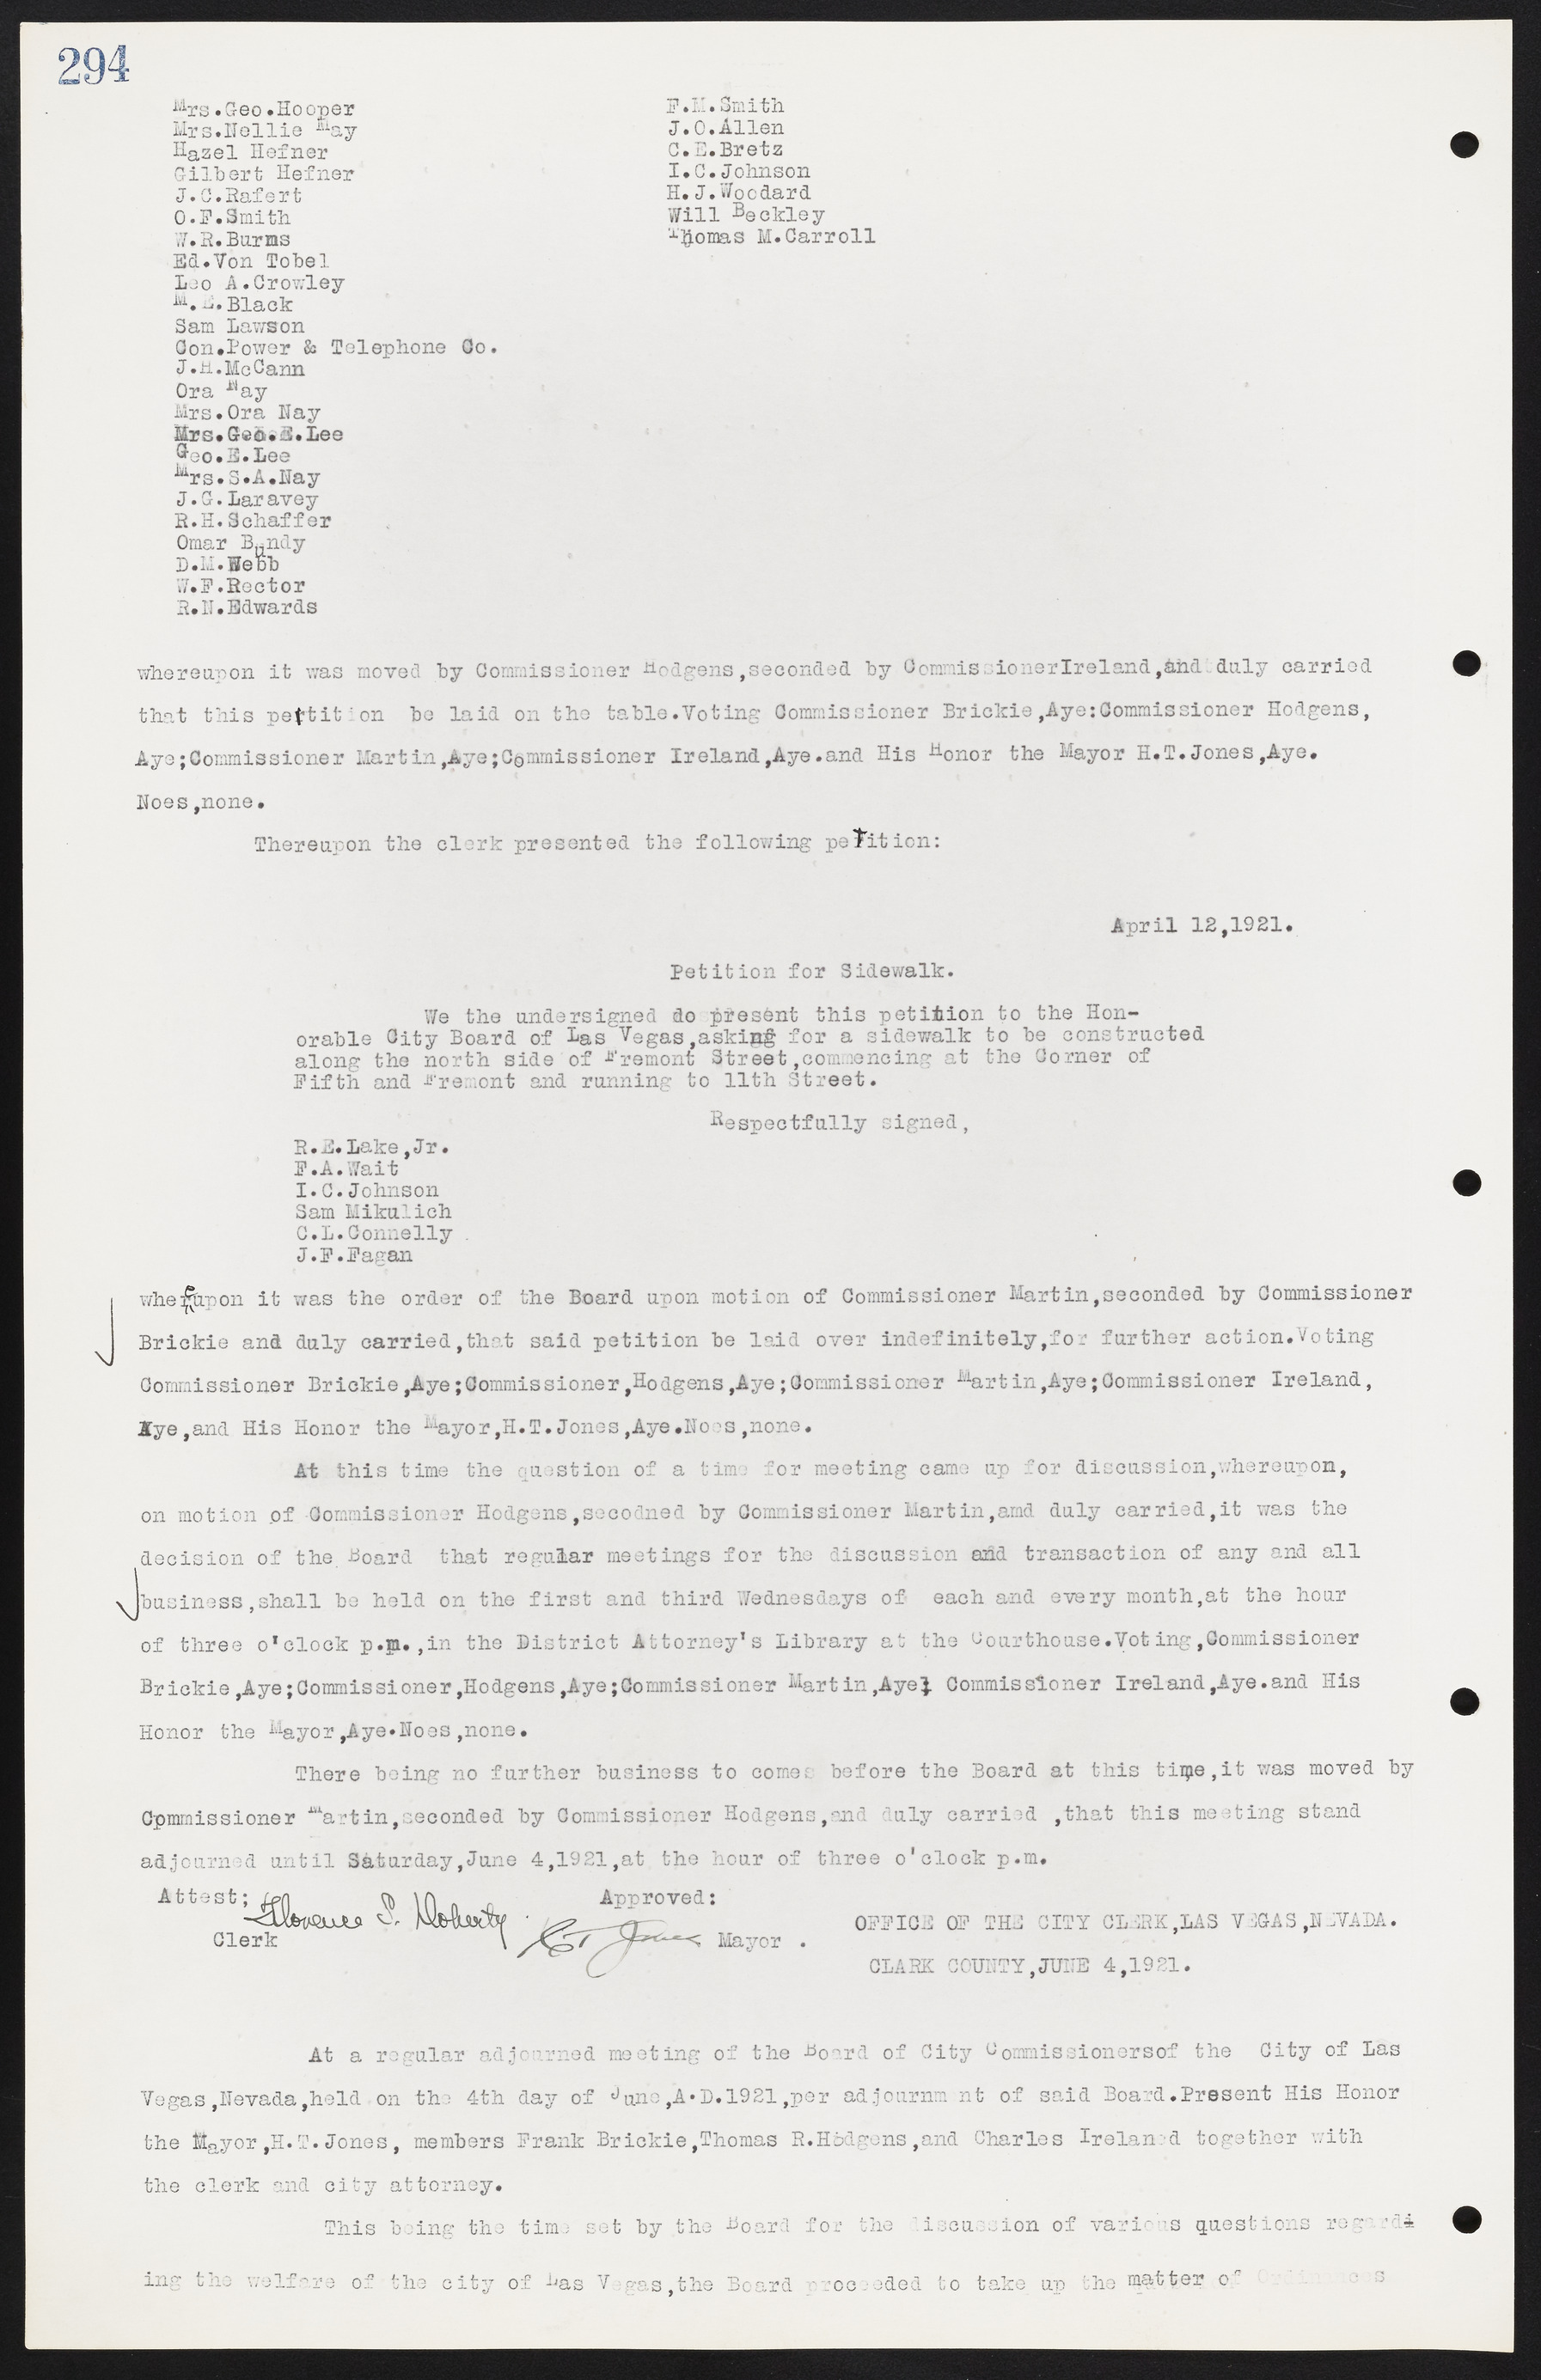 Las Vegas City Commission Minutes, June 22, 1911 to February 7, 1922, lvc000001-310